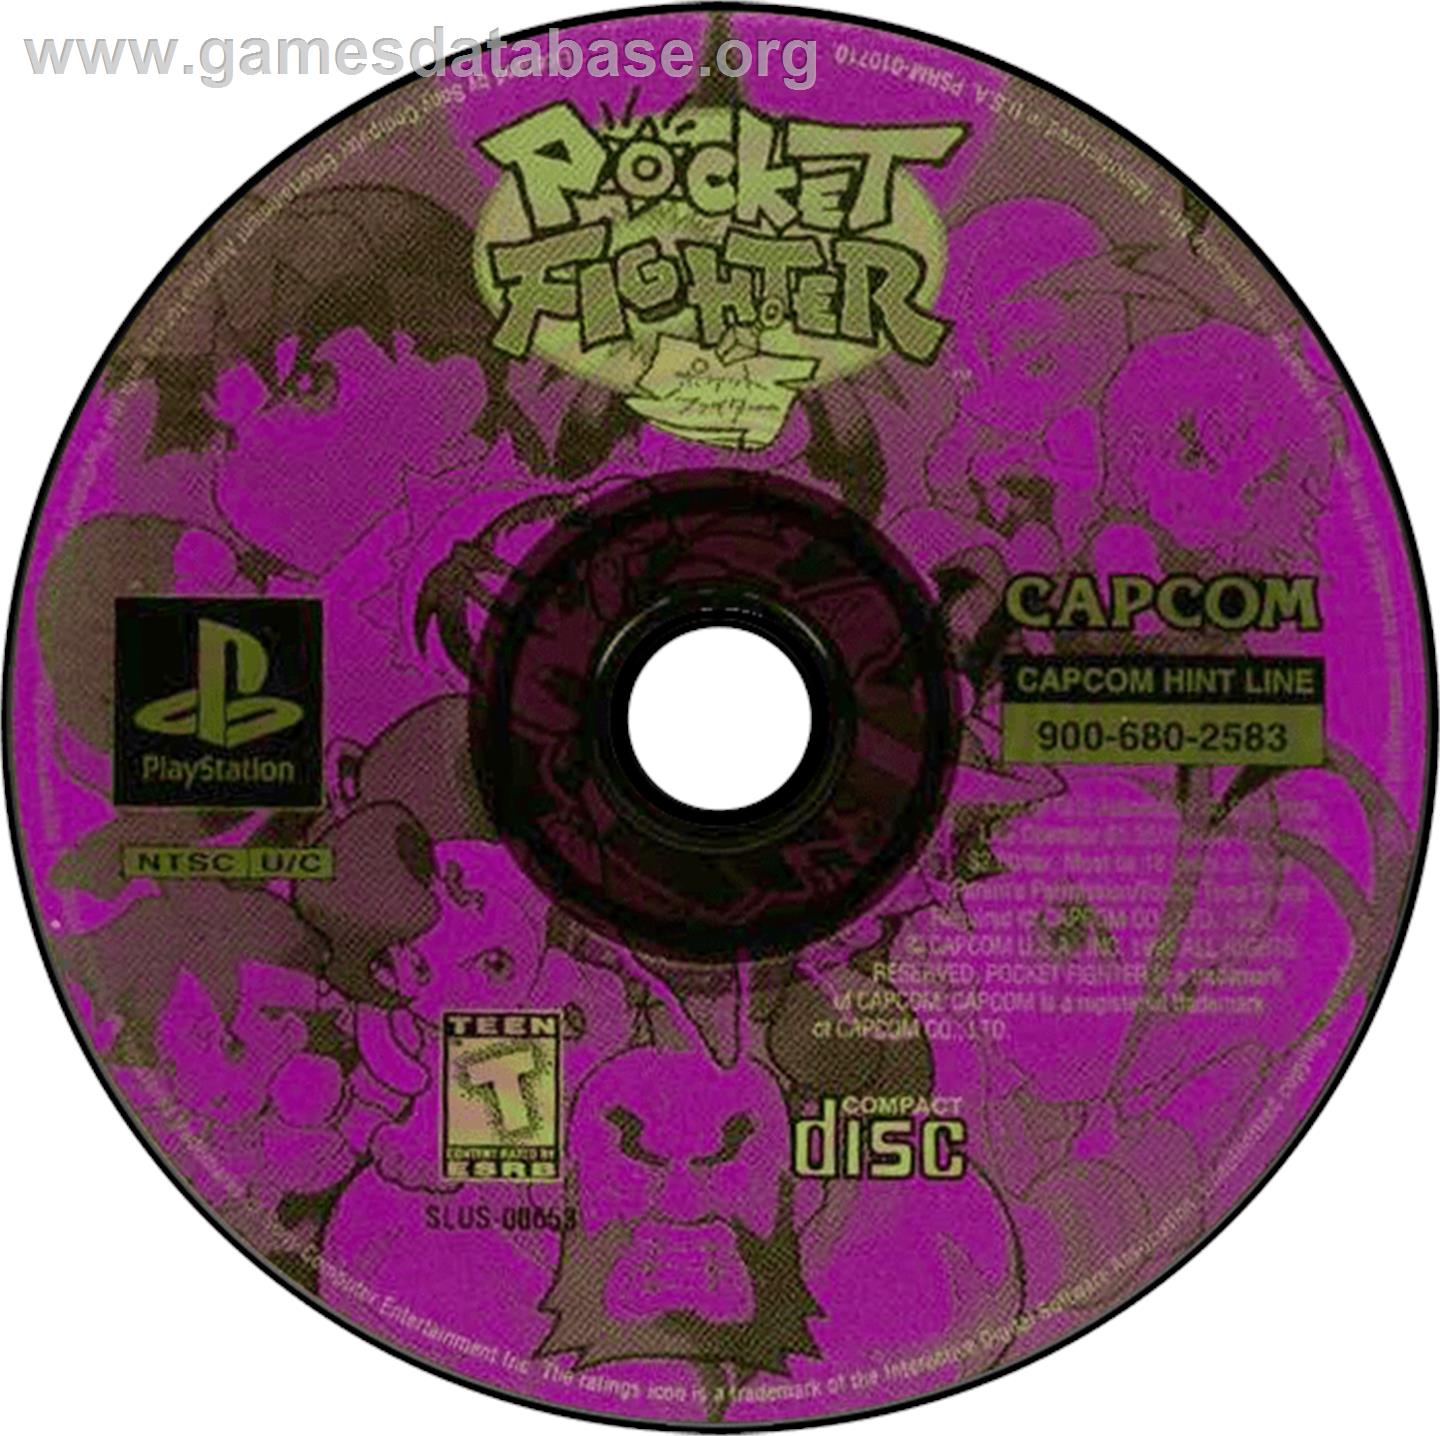 Pocket Fighter - Sony Playstation - Artwork - Disc